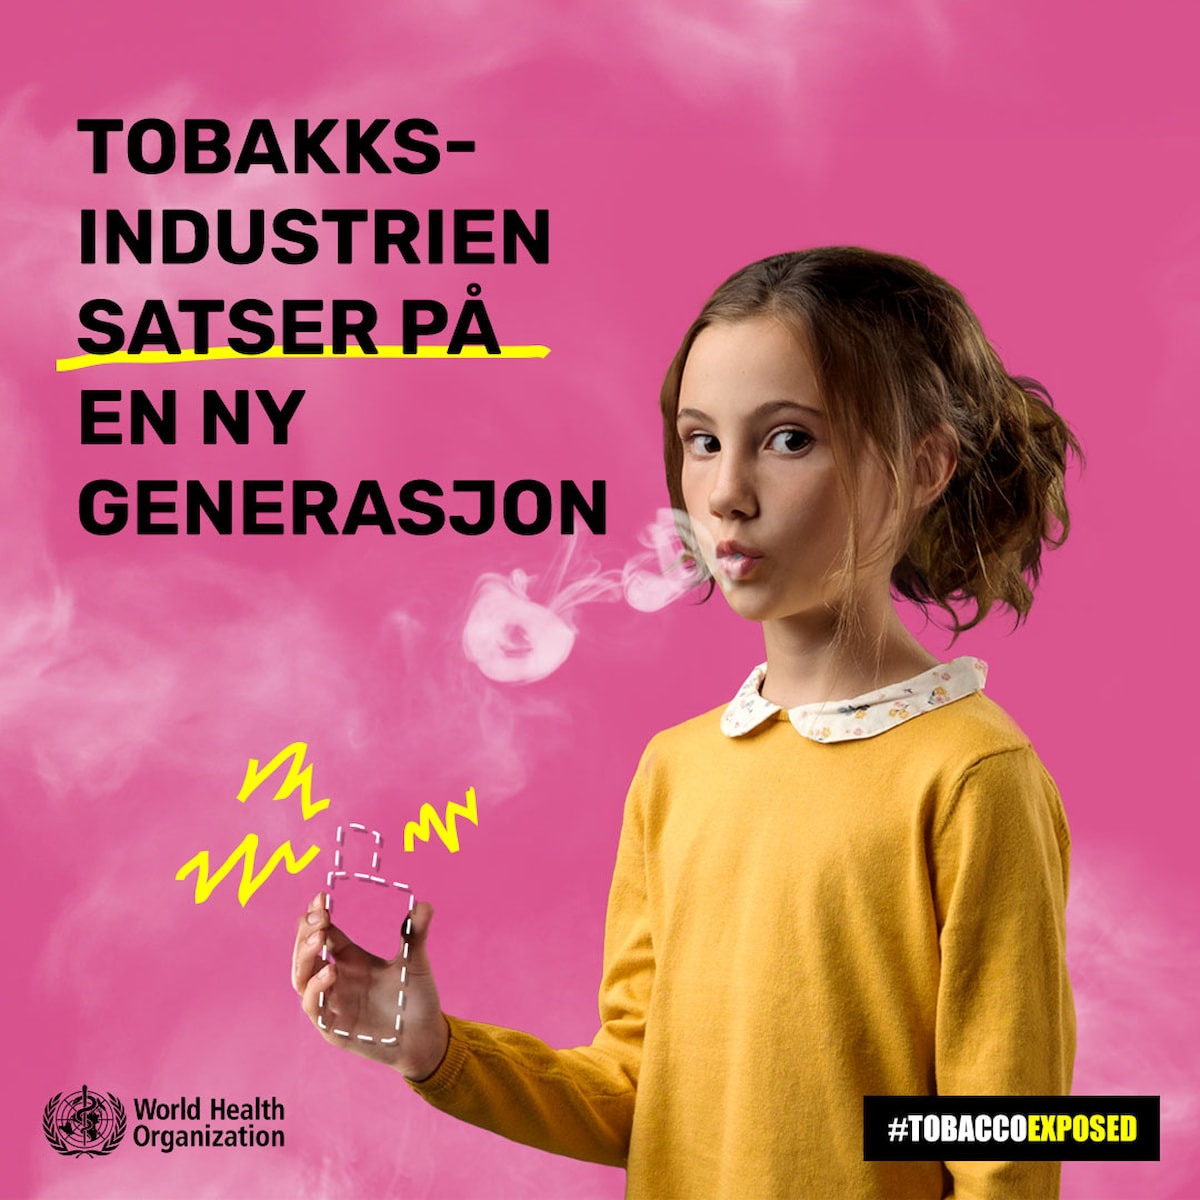 Tobakksindustrien satser på en ny generasjon (WHO)